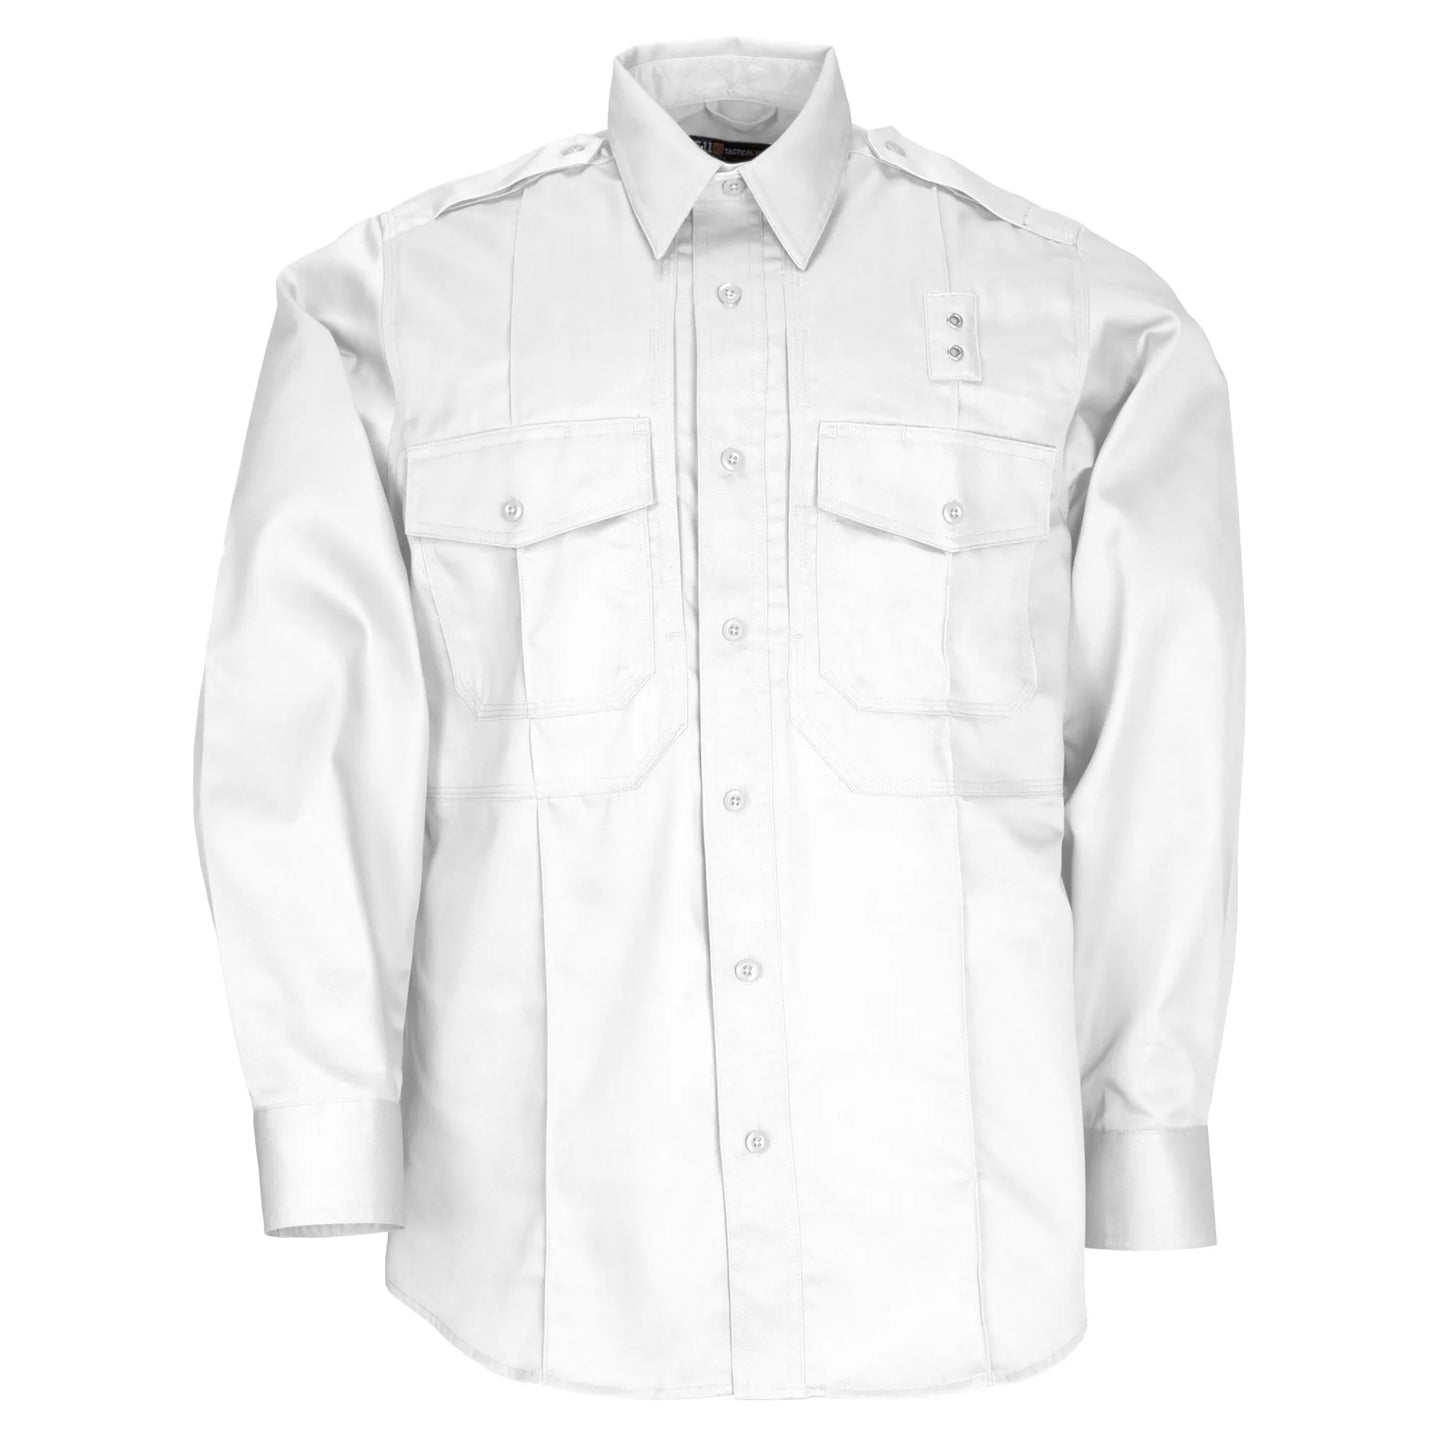 5.11 Tactical TWILL PDU Class B Long Sleeve Shirt